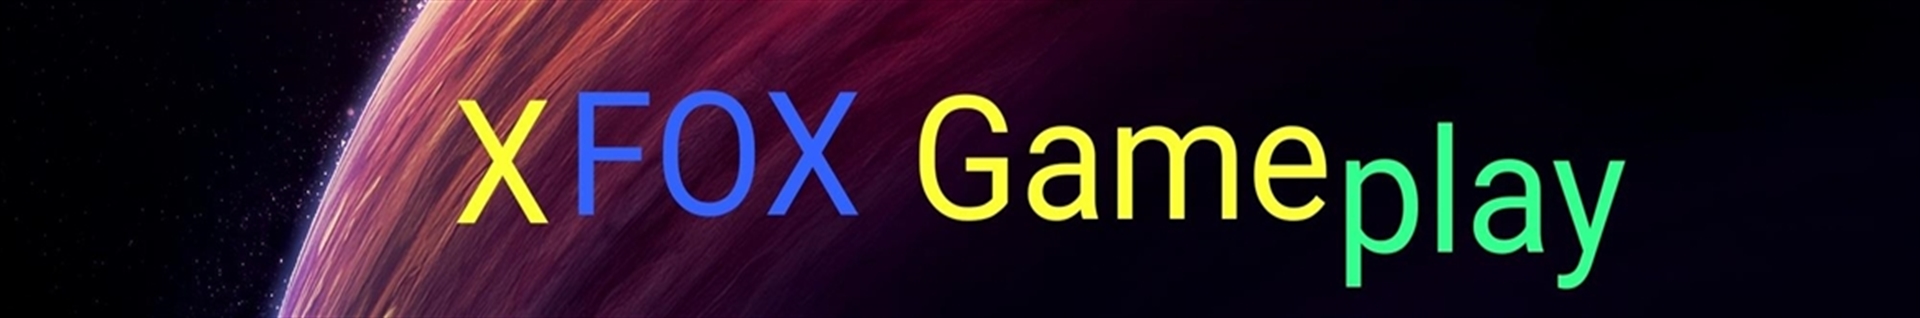 XFOX Gameplays